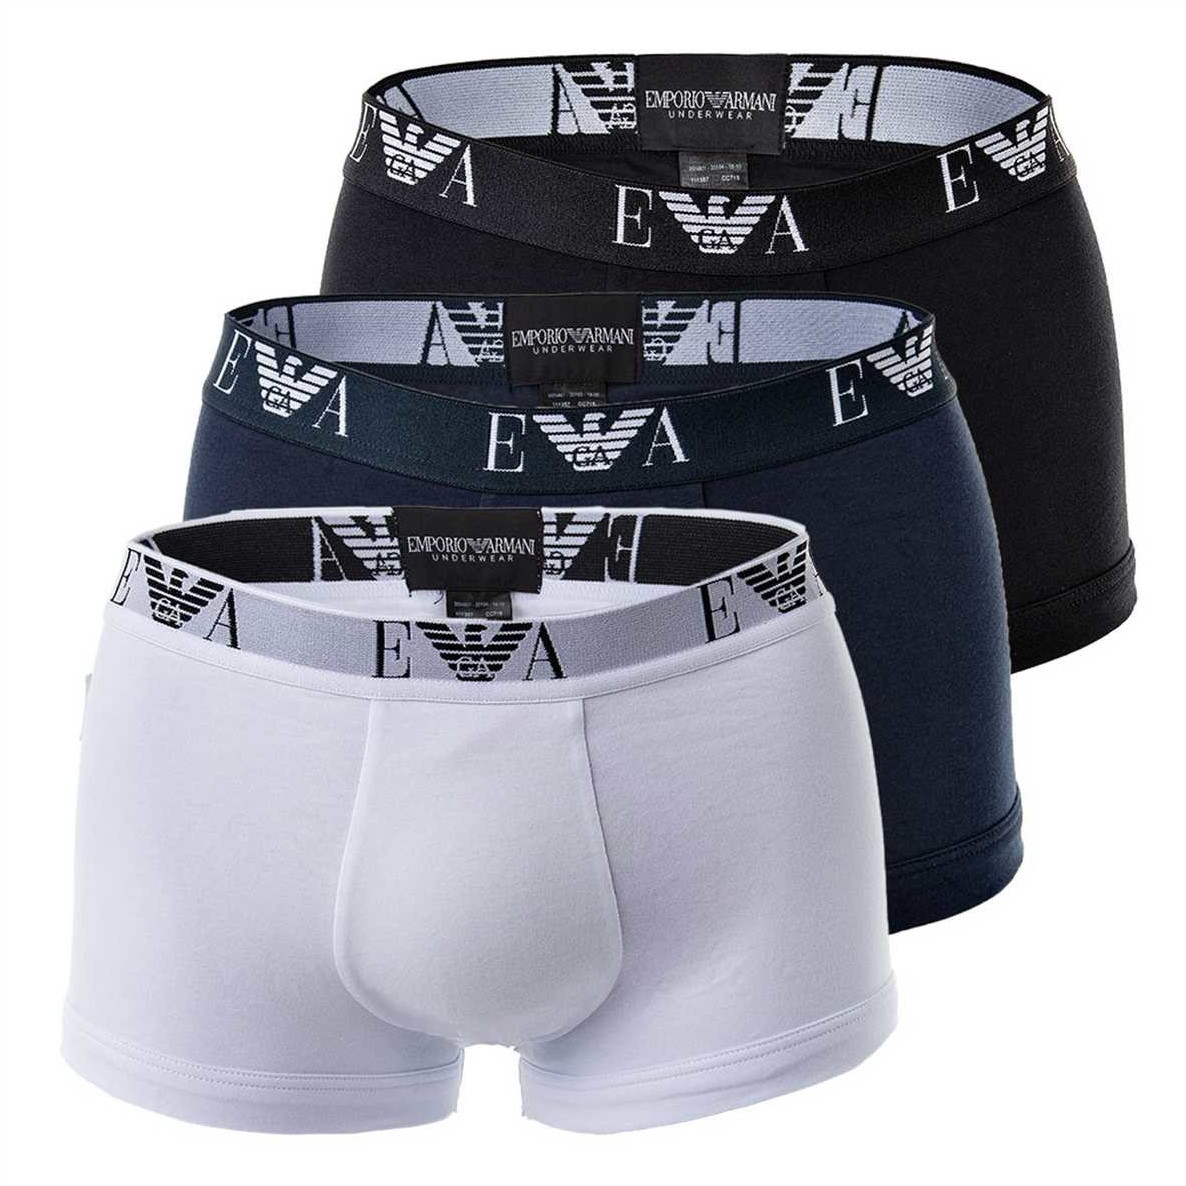 Emporio Armani 111357 96535 3/PK BOXER - Underwear from Jonathan